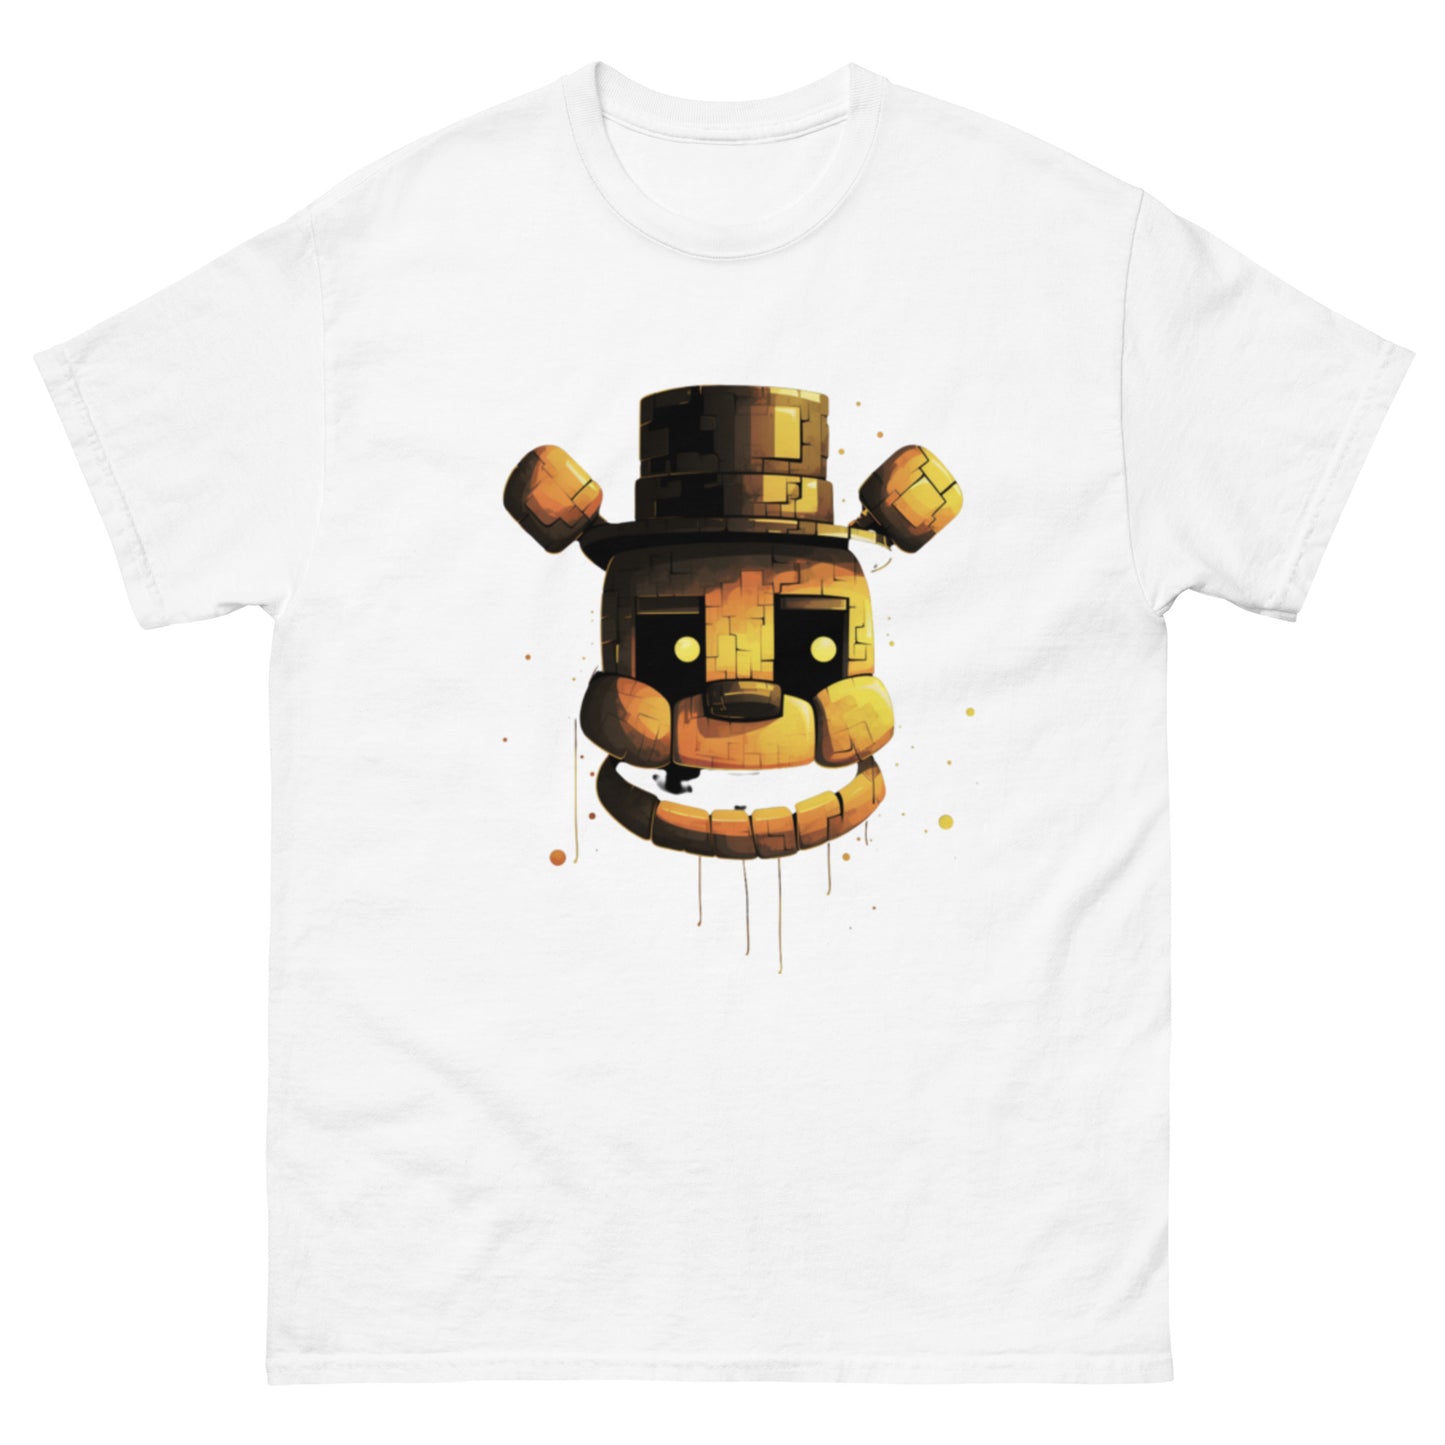 Golden Freddy T Shirt - Five Nights At Freddy's